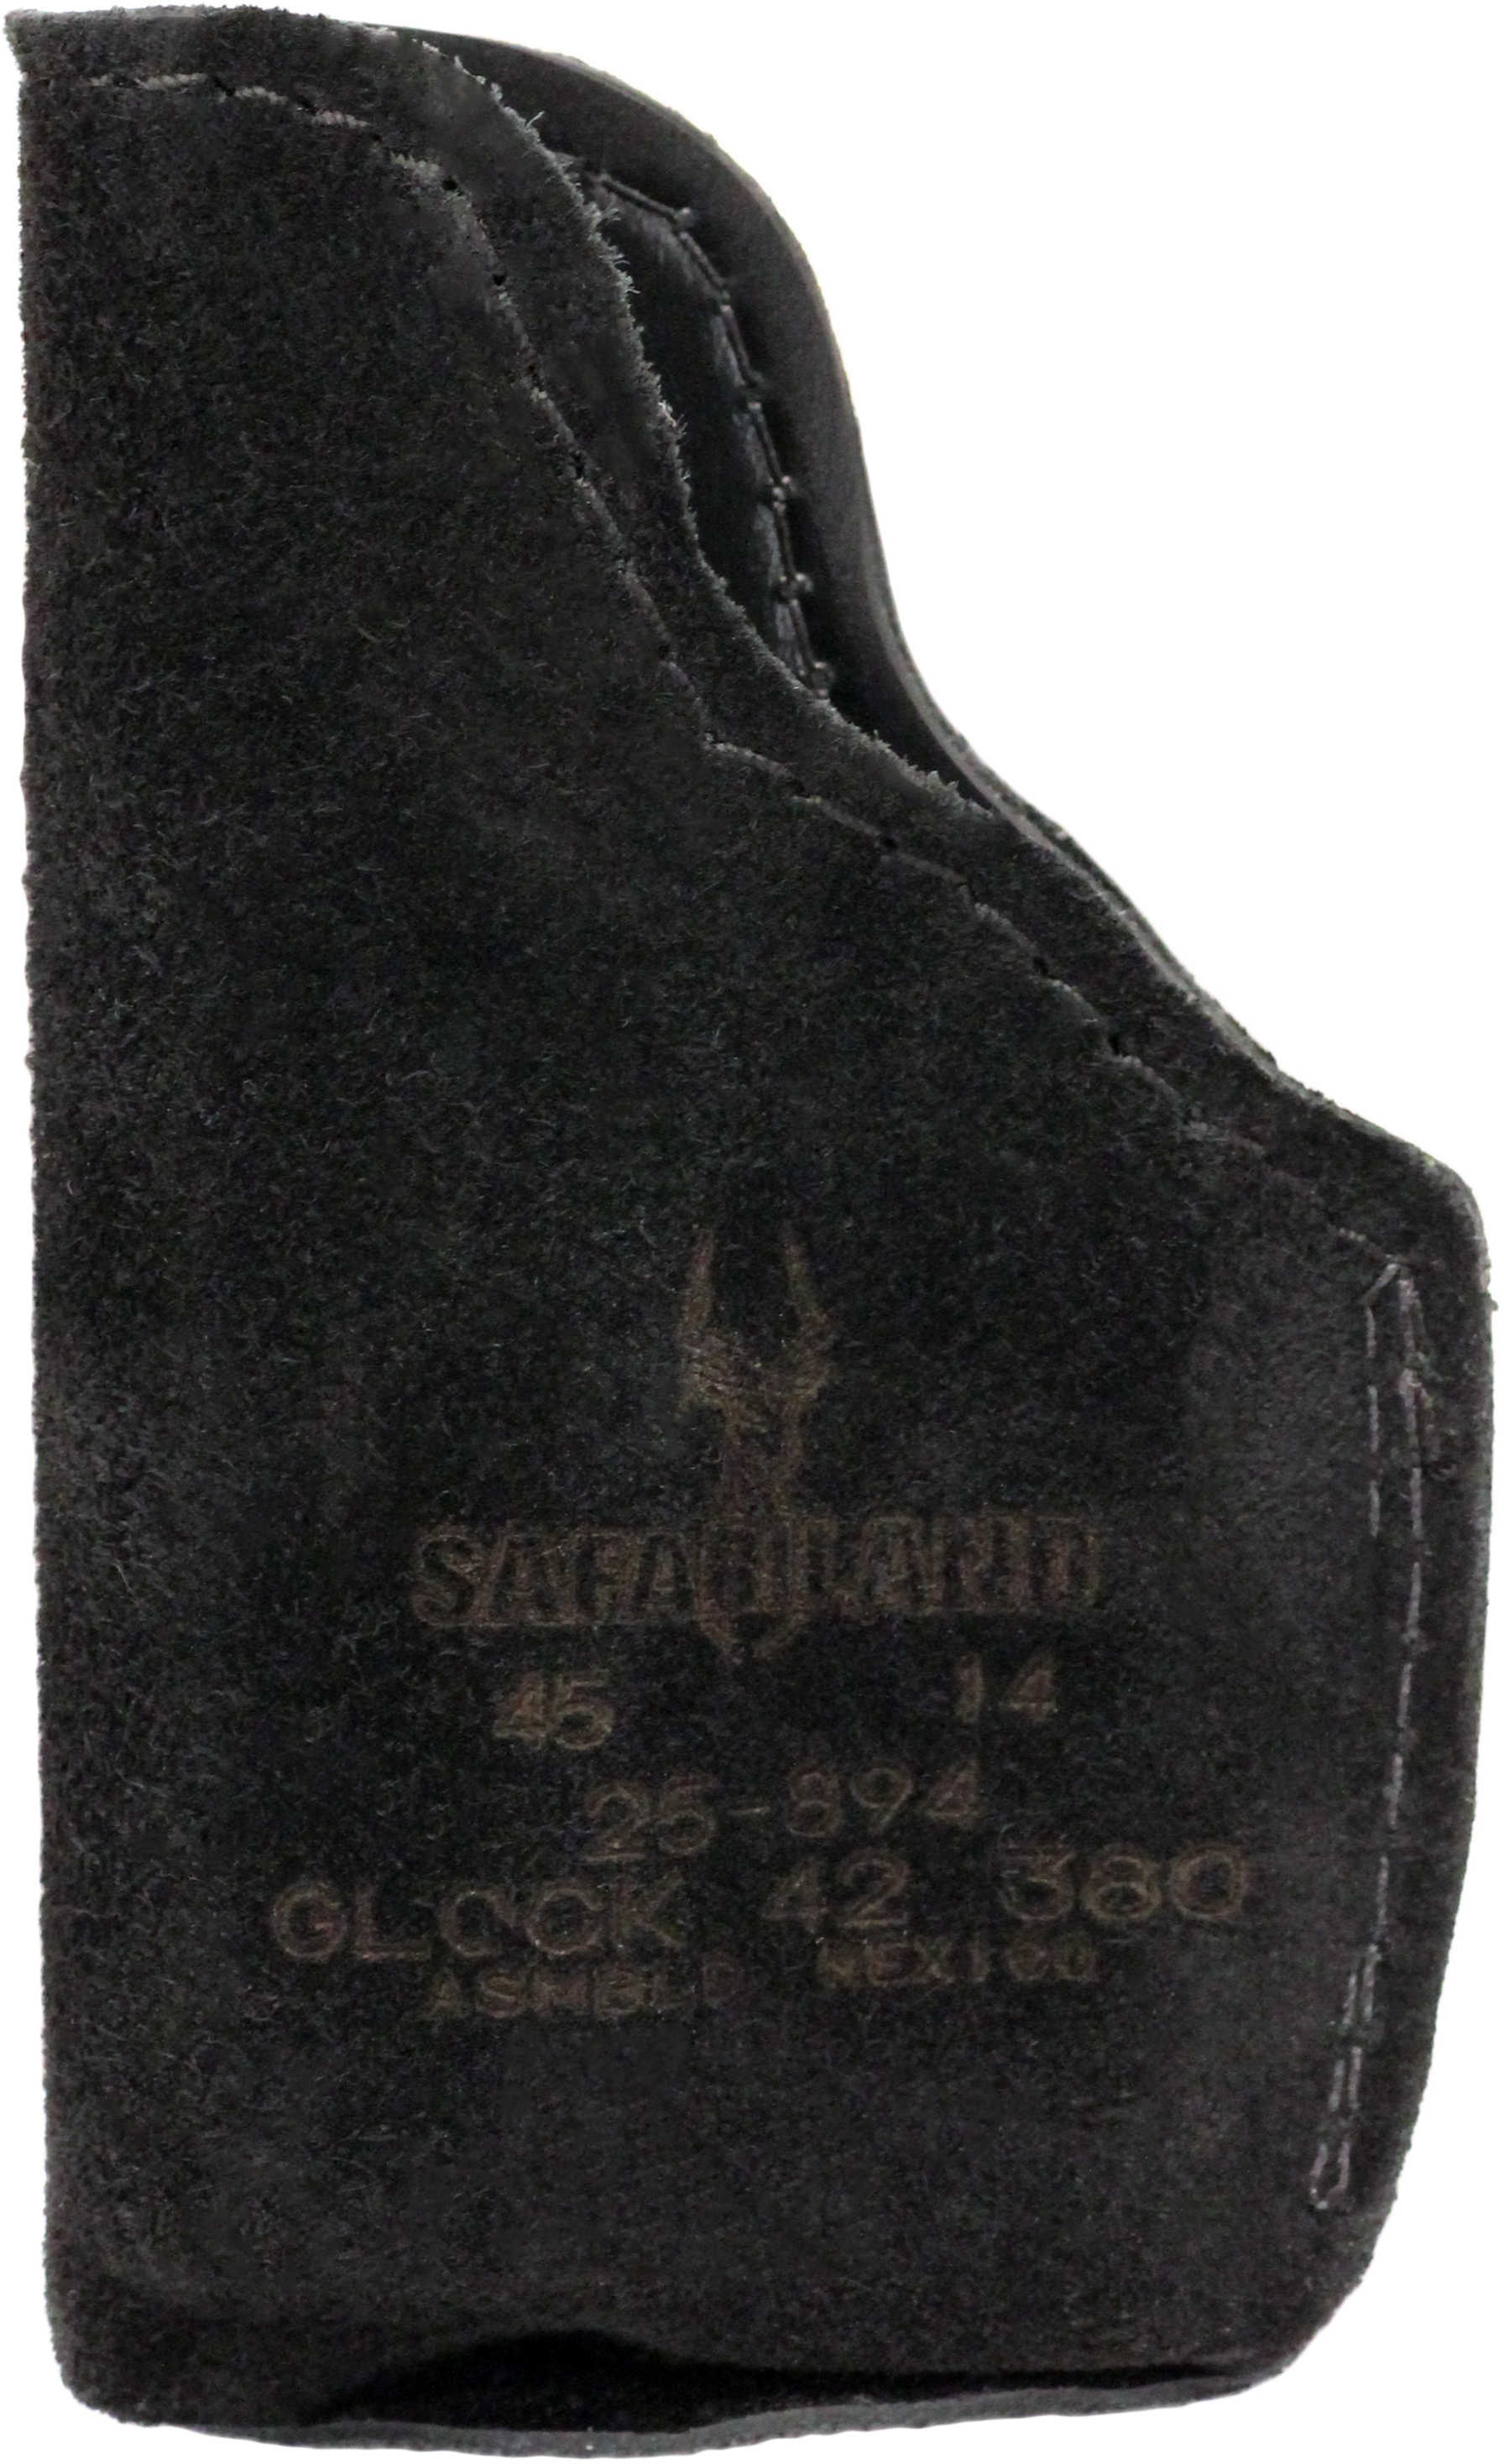 Safariland Inside the Pocket Holster for Glock 42, Plain Black Md: 25-894-21